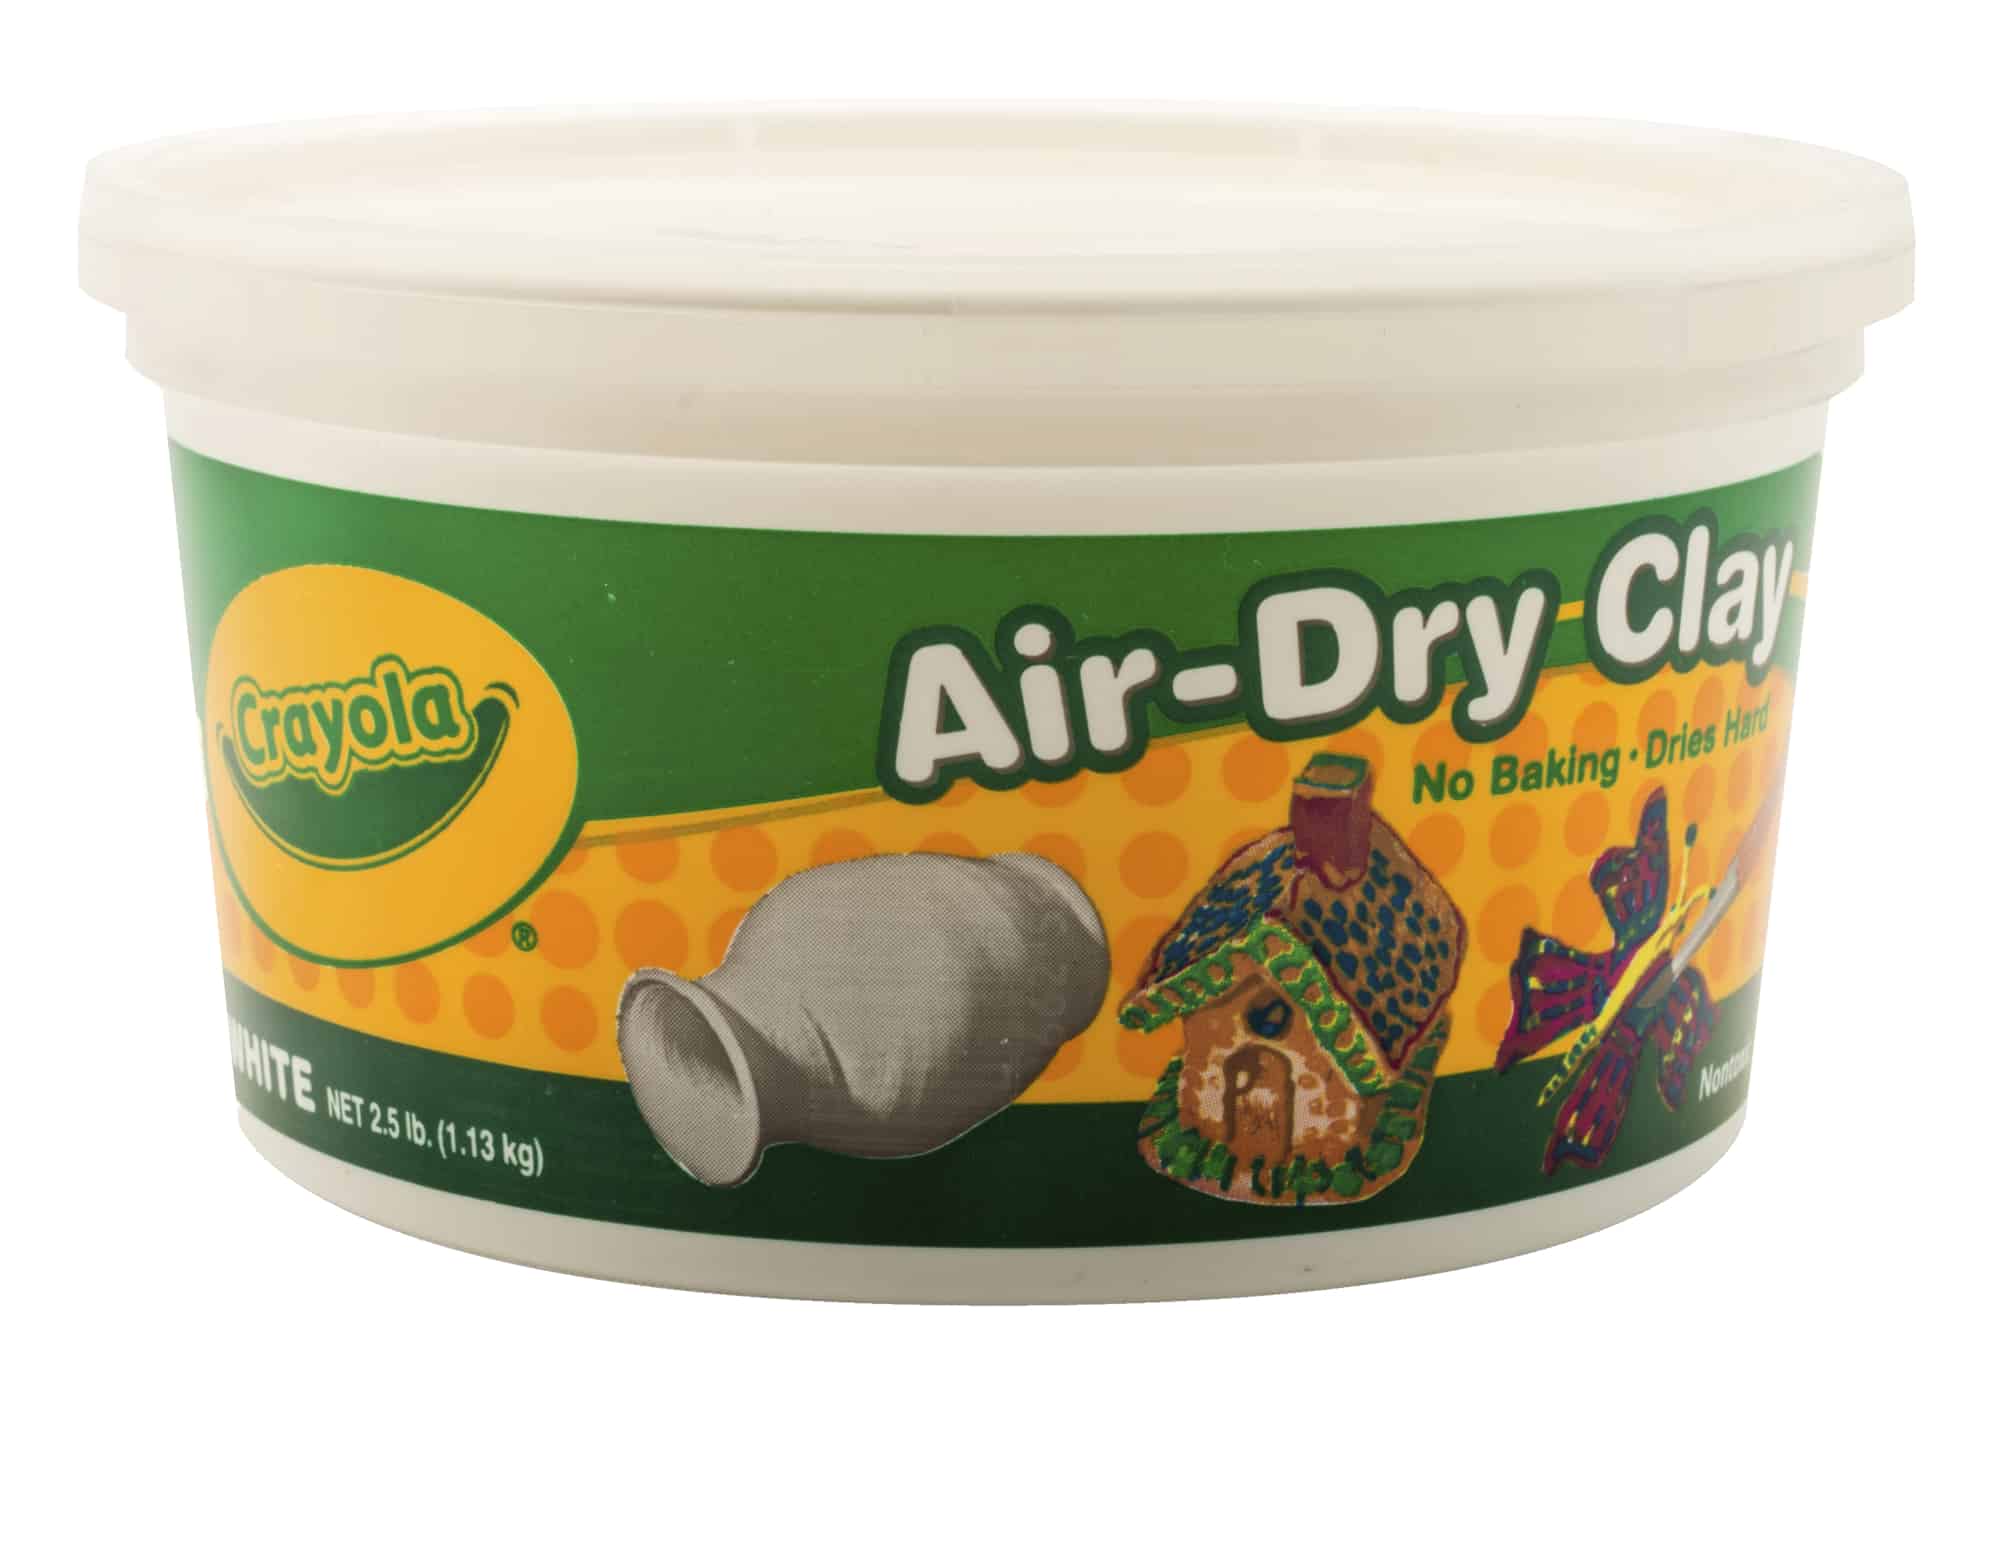 Crayola Air-Dry Clay, White, 2.5 Lb Resealable Bucket $2.99 Reg $6.40